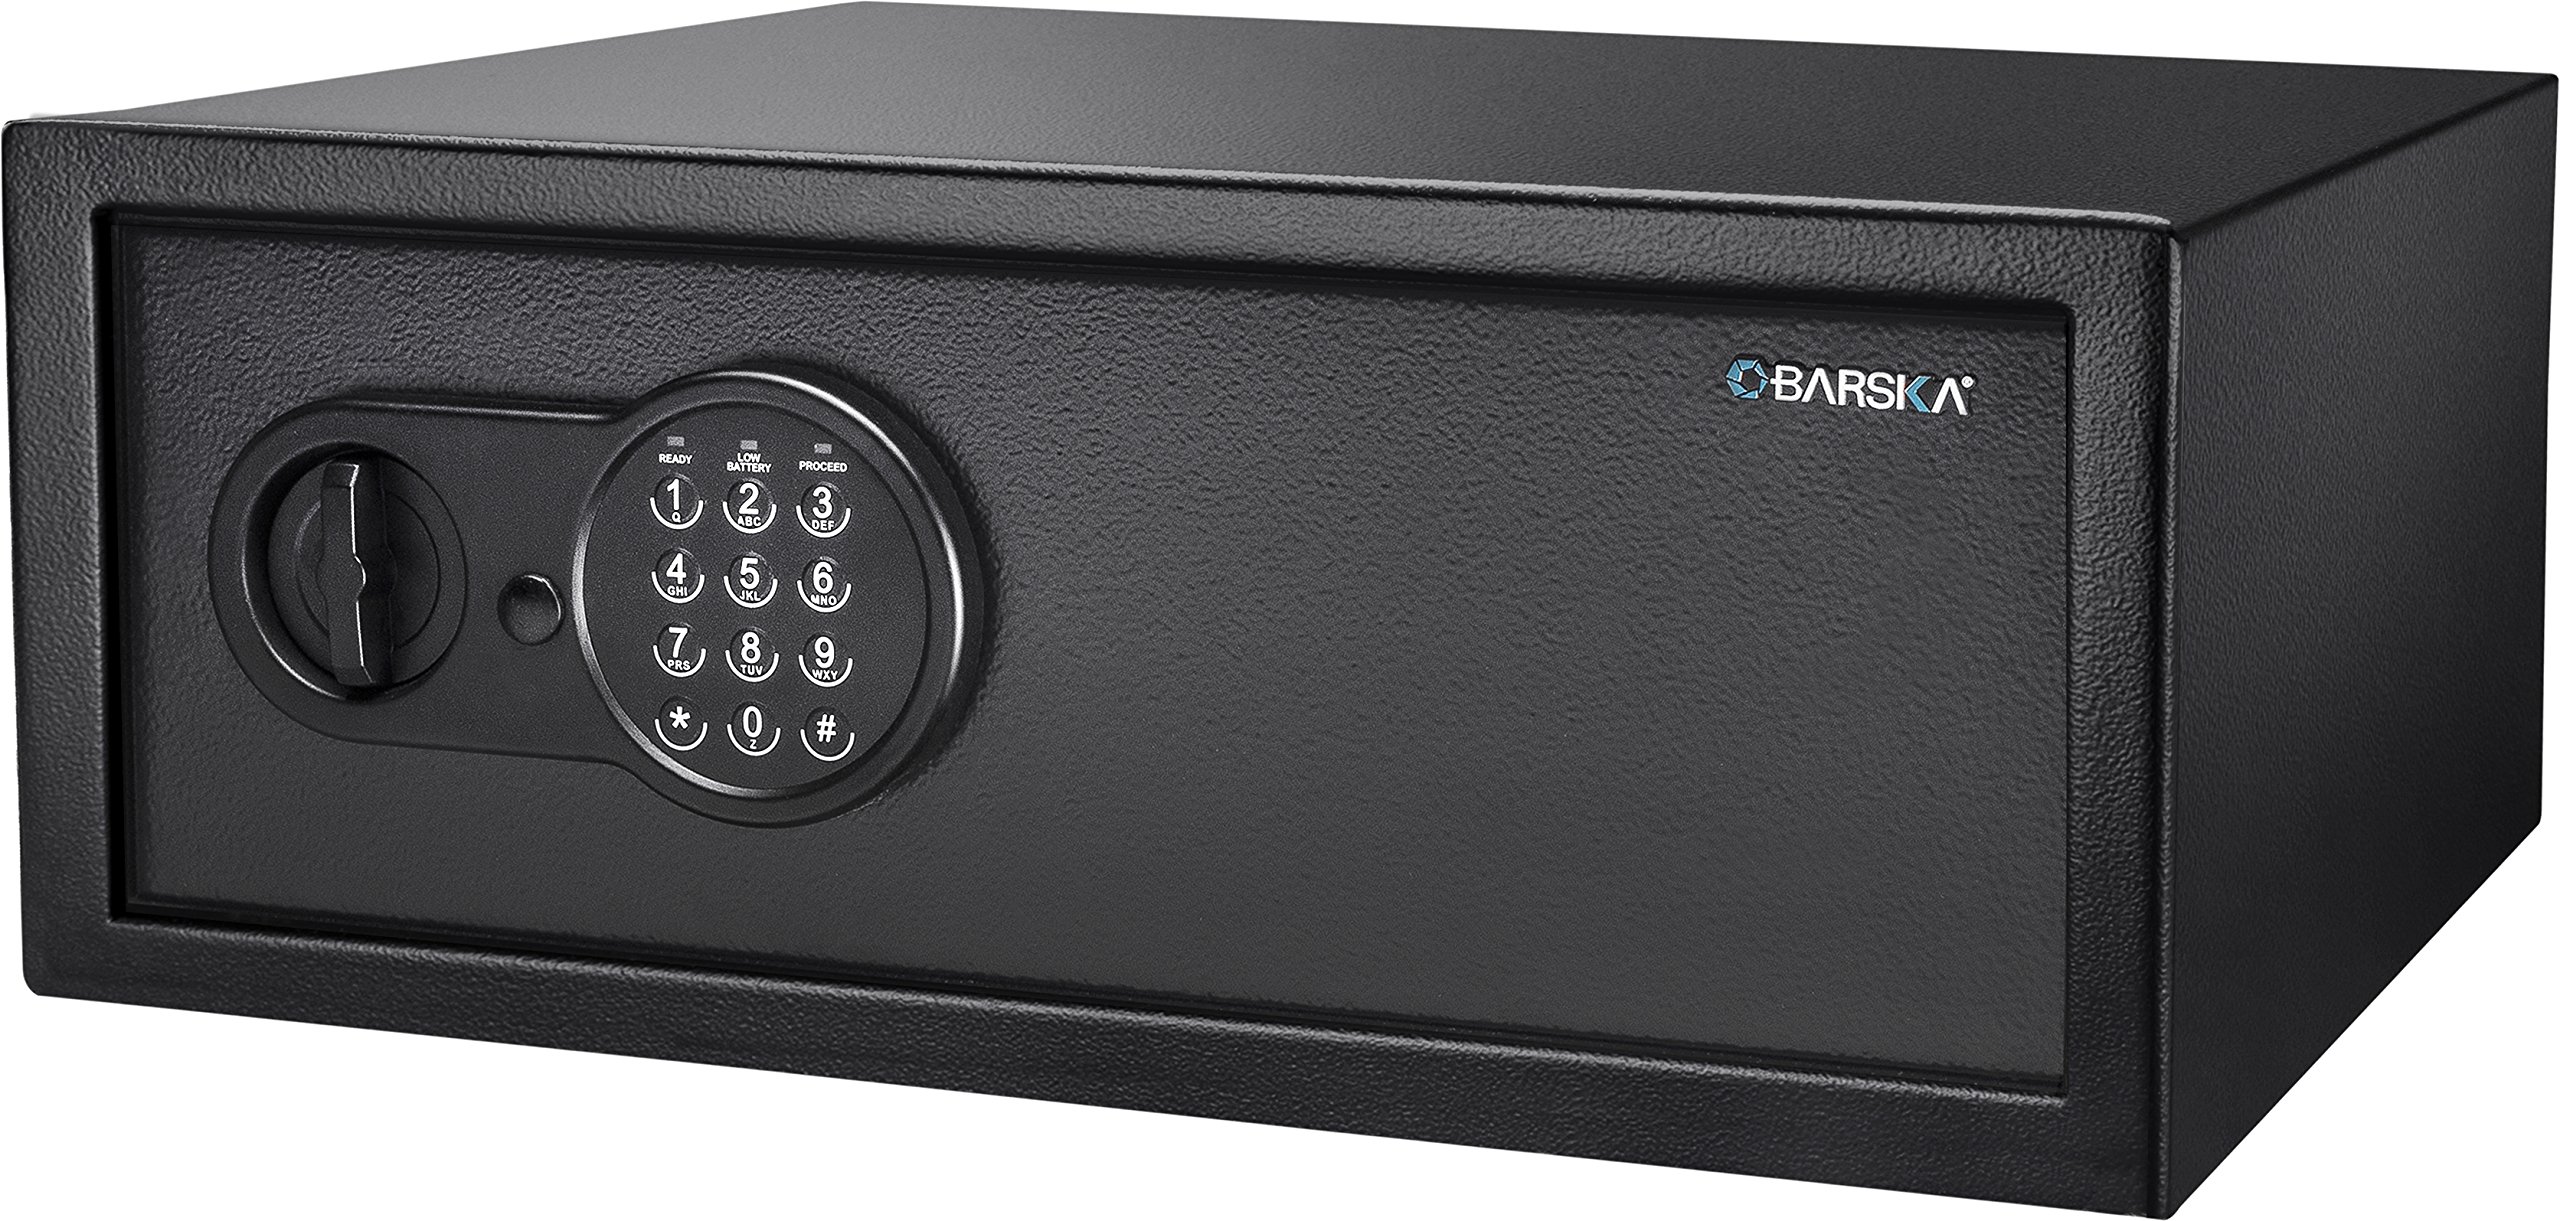 Barska AX13090 Digital Keypad Security Safe Box 1.2 Cub...